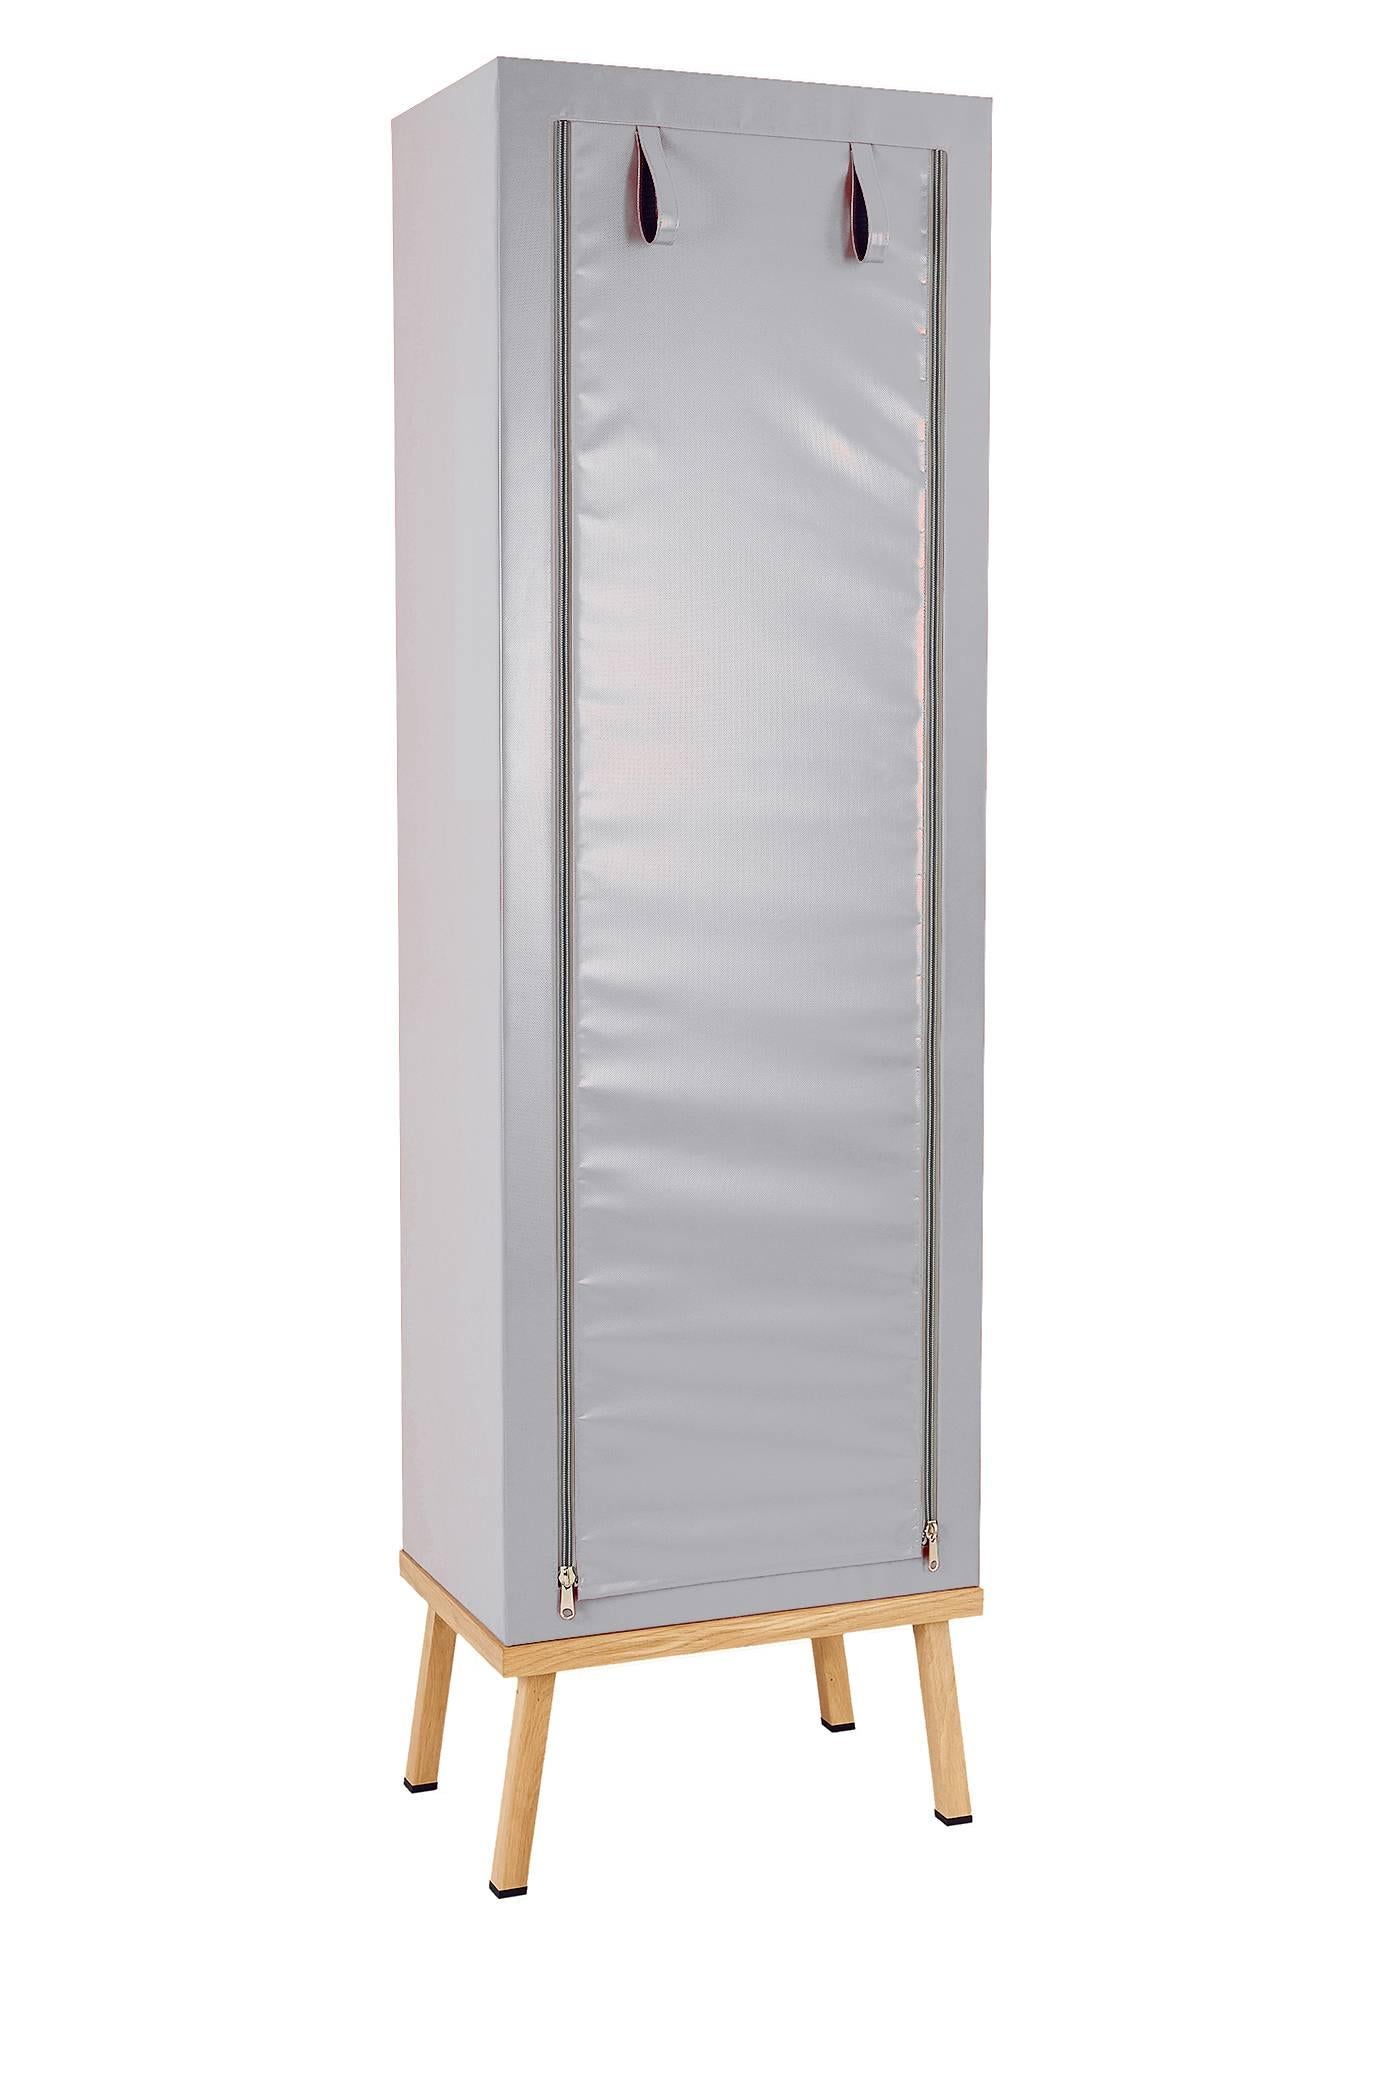 Visser and Meijwaard Truecolors cabinet in grey PVC cloth with zipper opening

Designed by Visser en Meijwaard 
Contemporary, Netherlands, 2015
PVC cloth, oakwood, rubber
Measures: H 78.75 in, W 23.75 in, D 15.75 in 

Lead time 8-10 weeks.